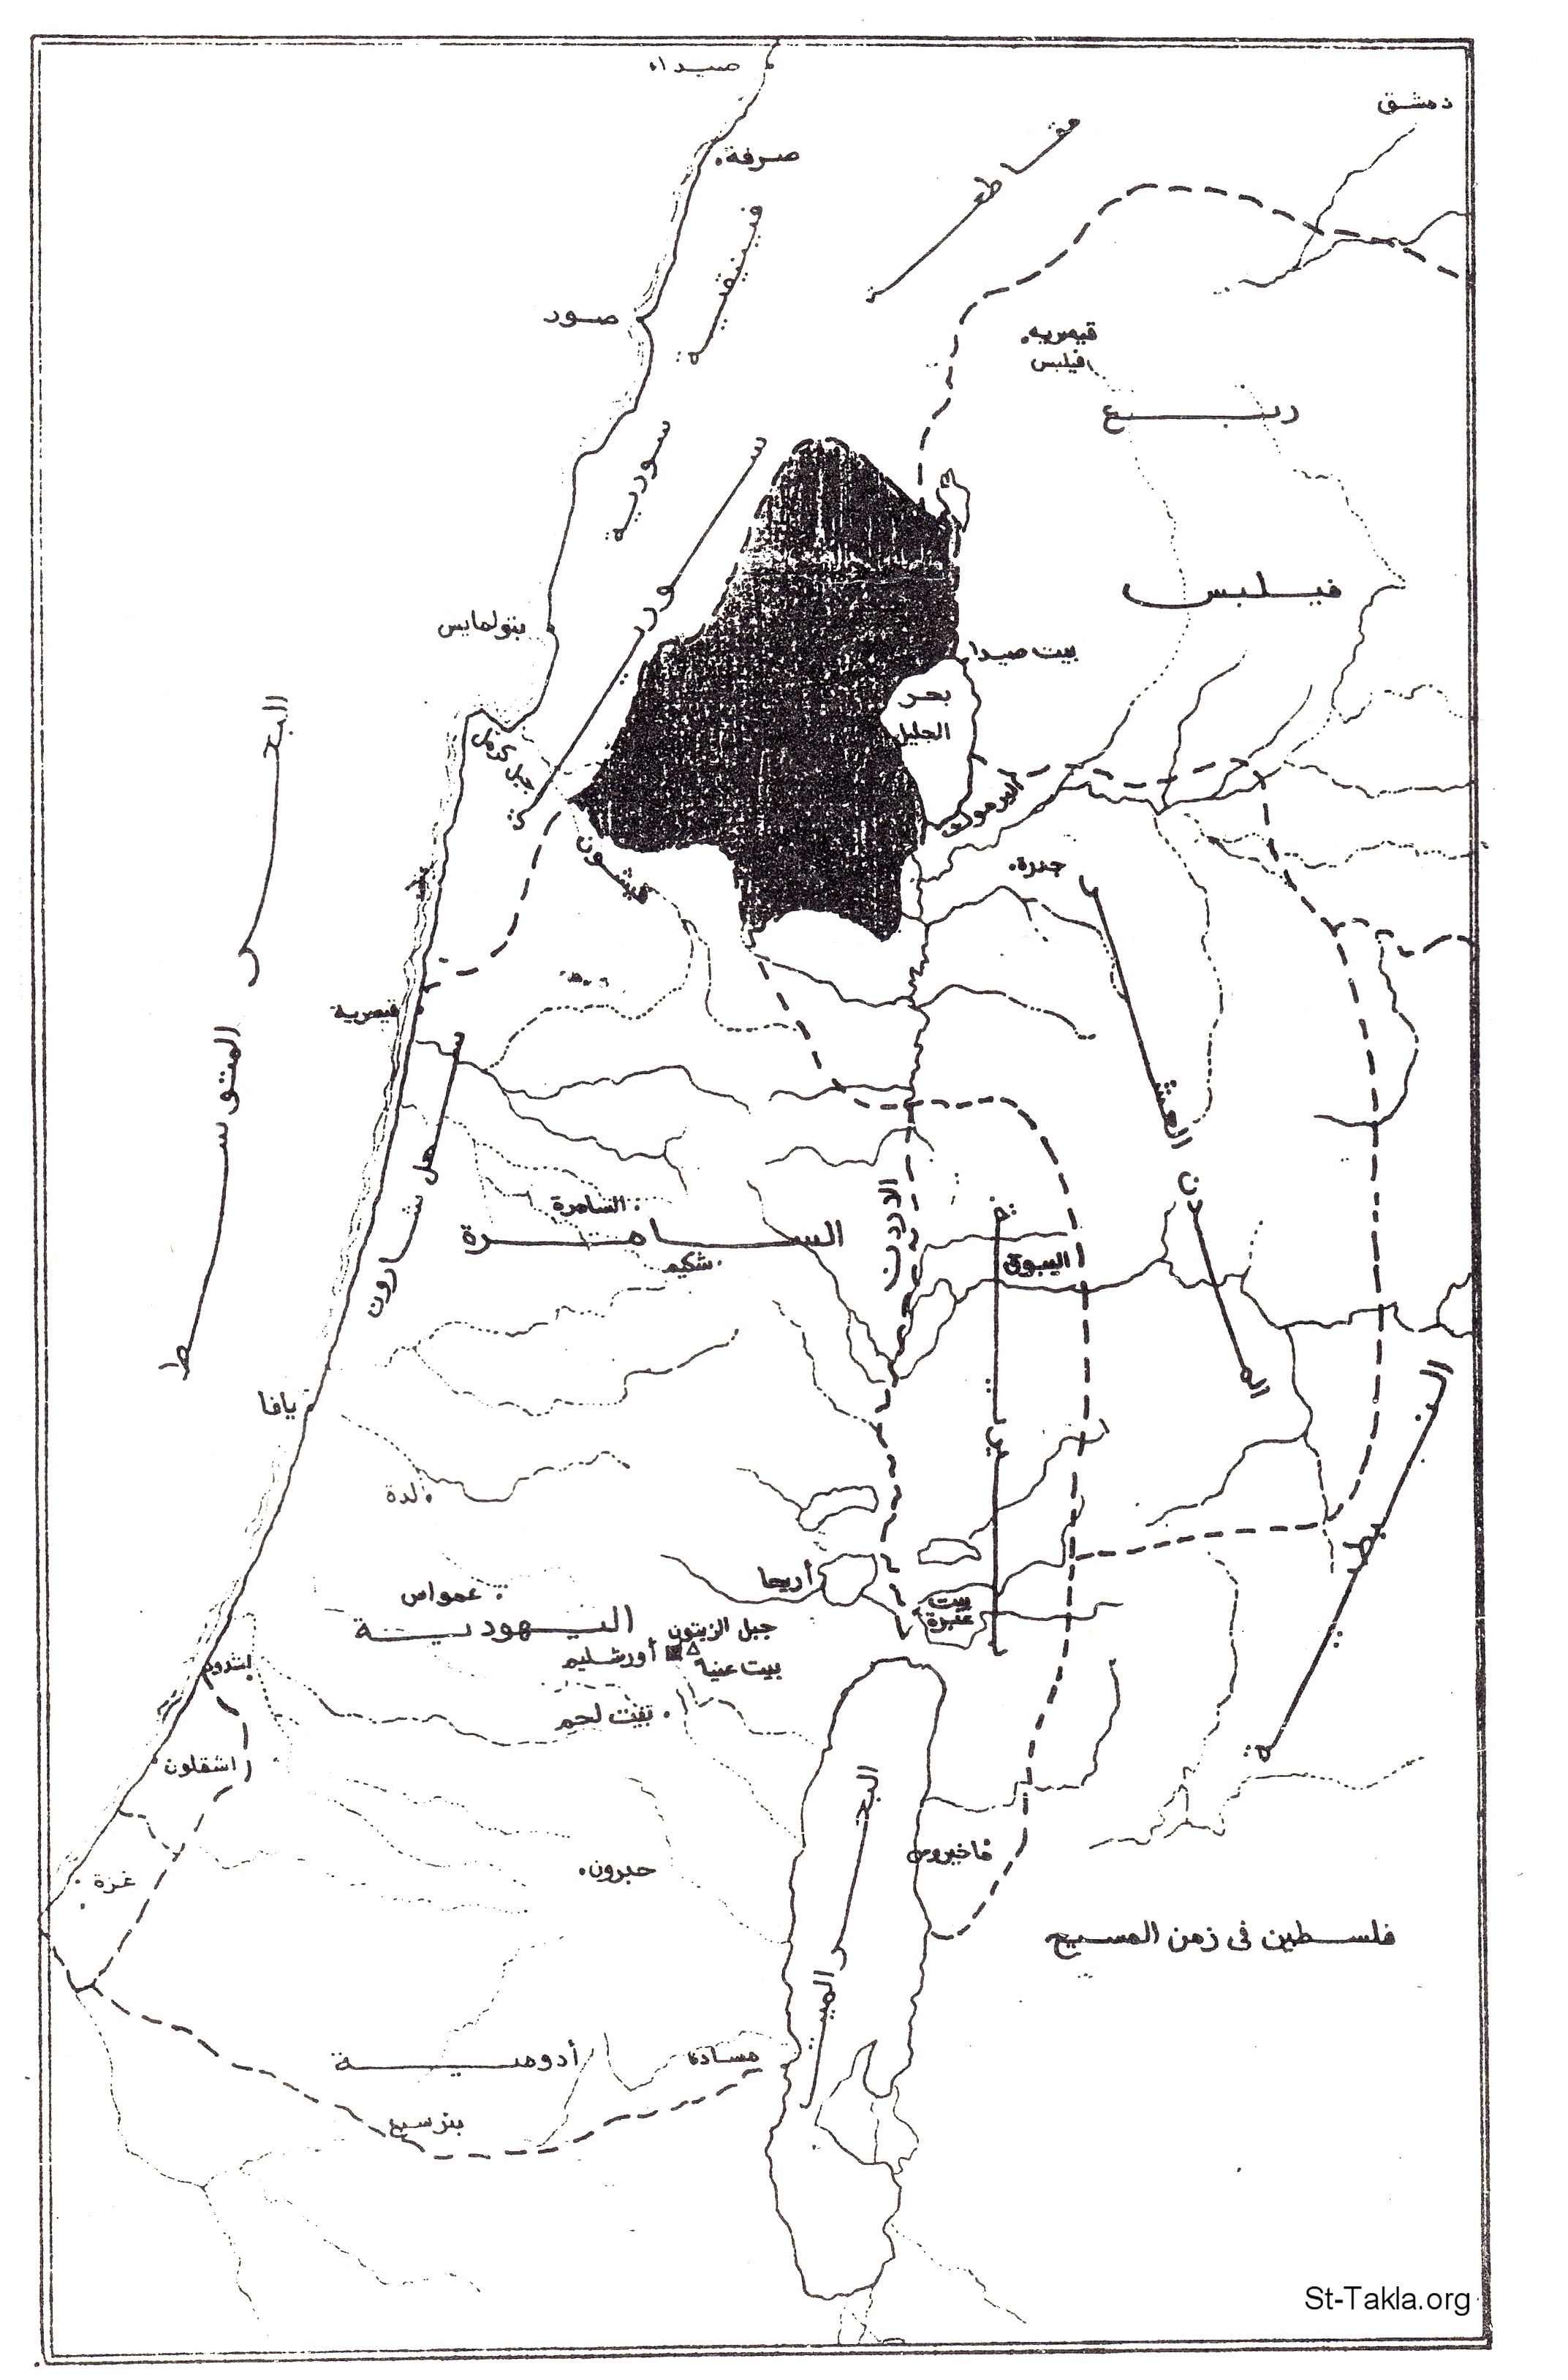 St-Takla.org Image: Map of Palestine at the time of Christ صورة في موقع الأنبا تكلا: خريطة فلسطين في زمن المسيح